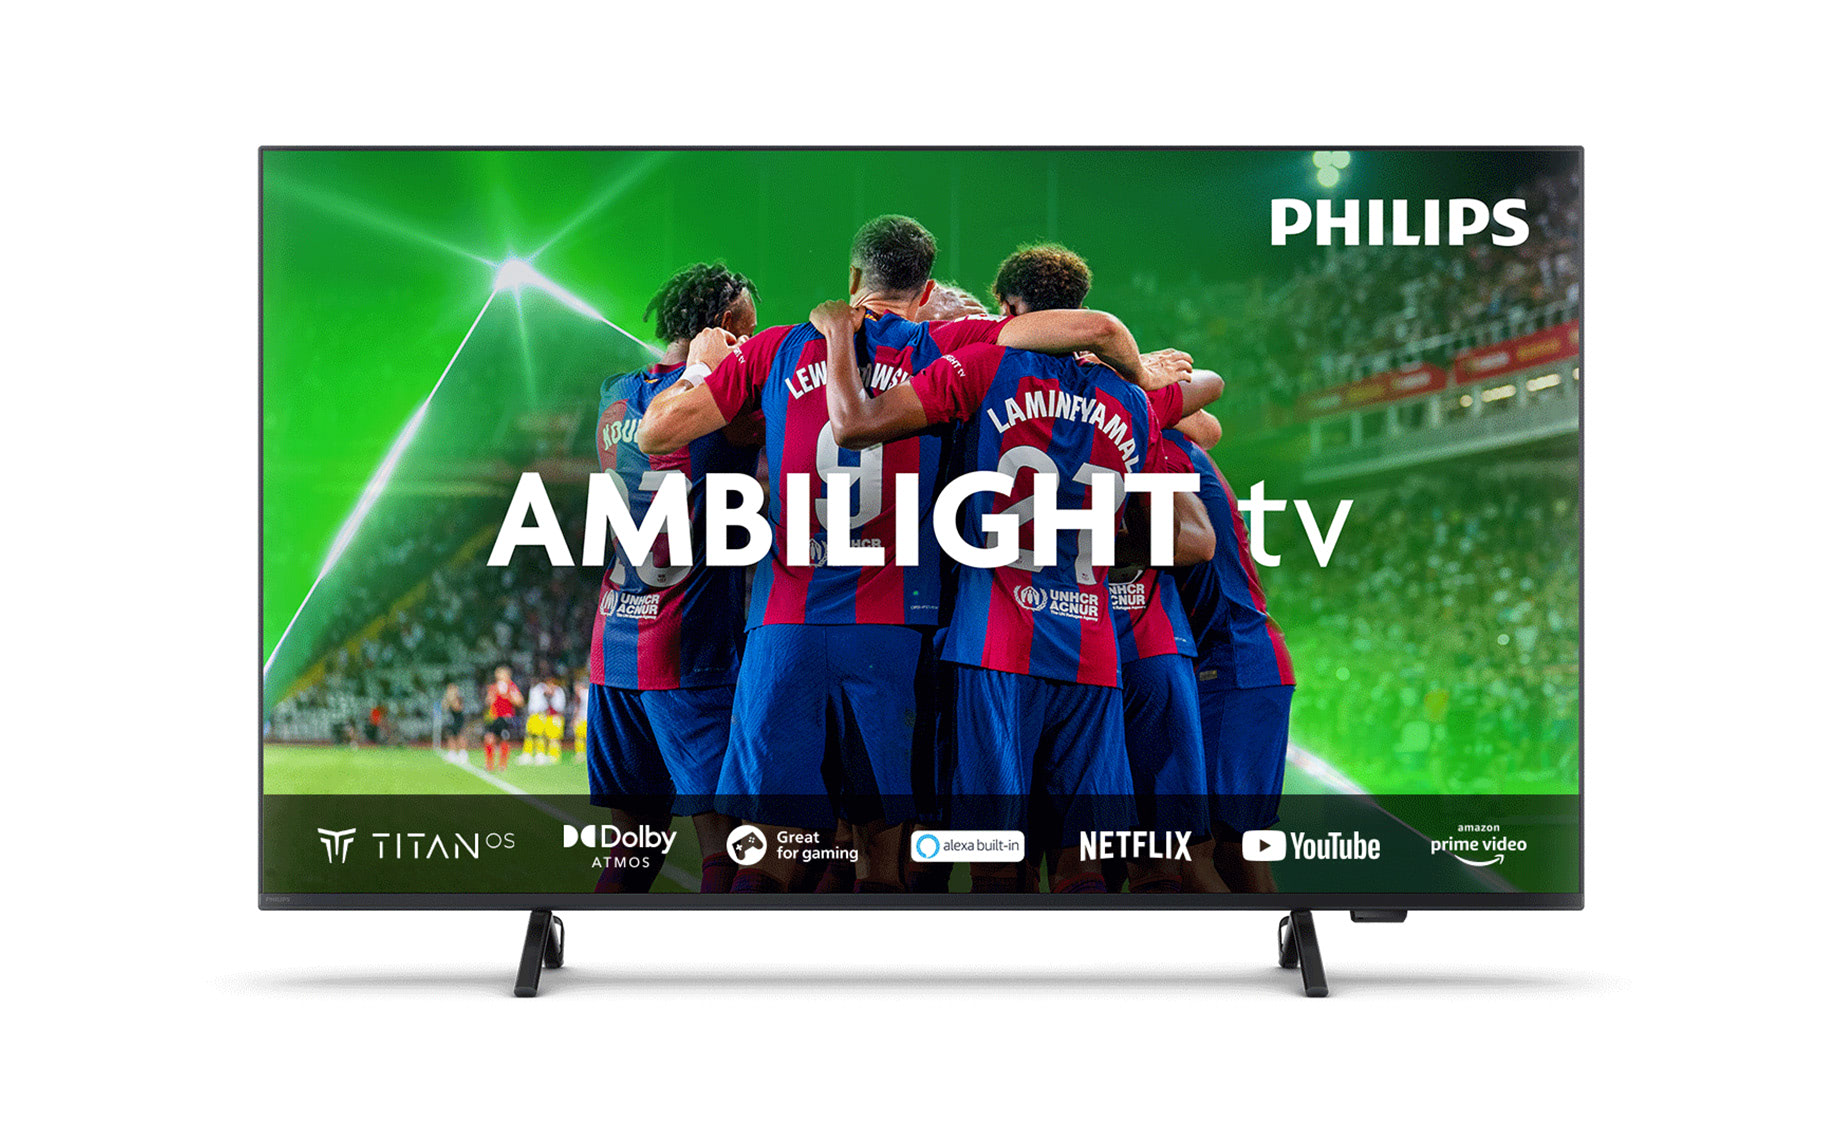 Philips 50PUS8319 Ultra HD LED TV